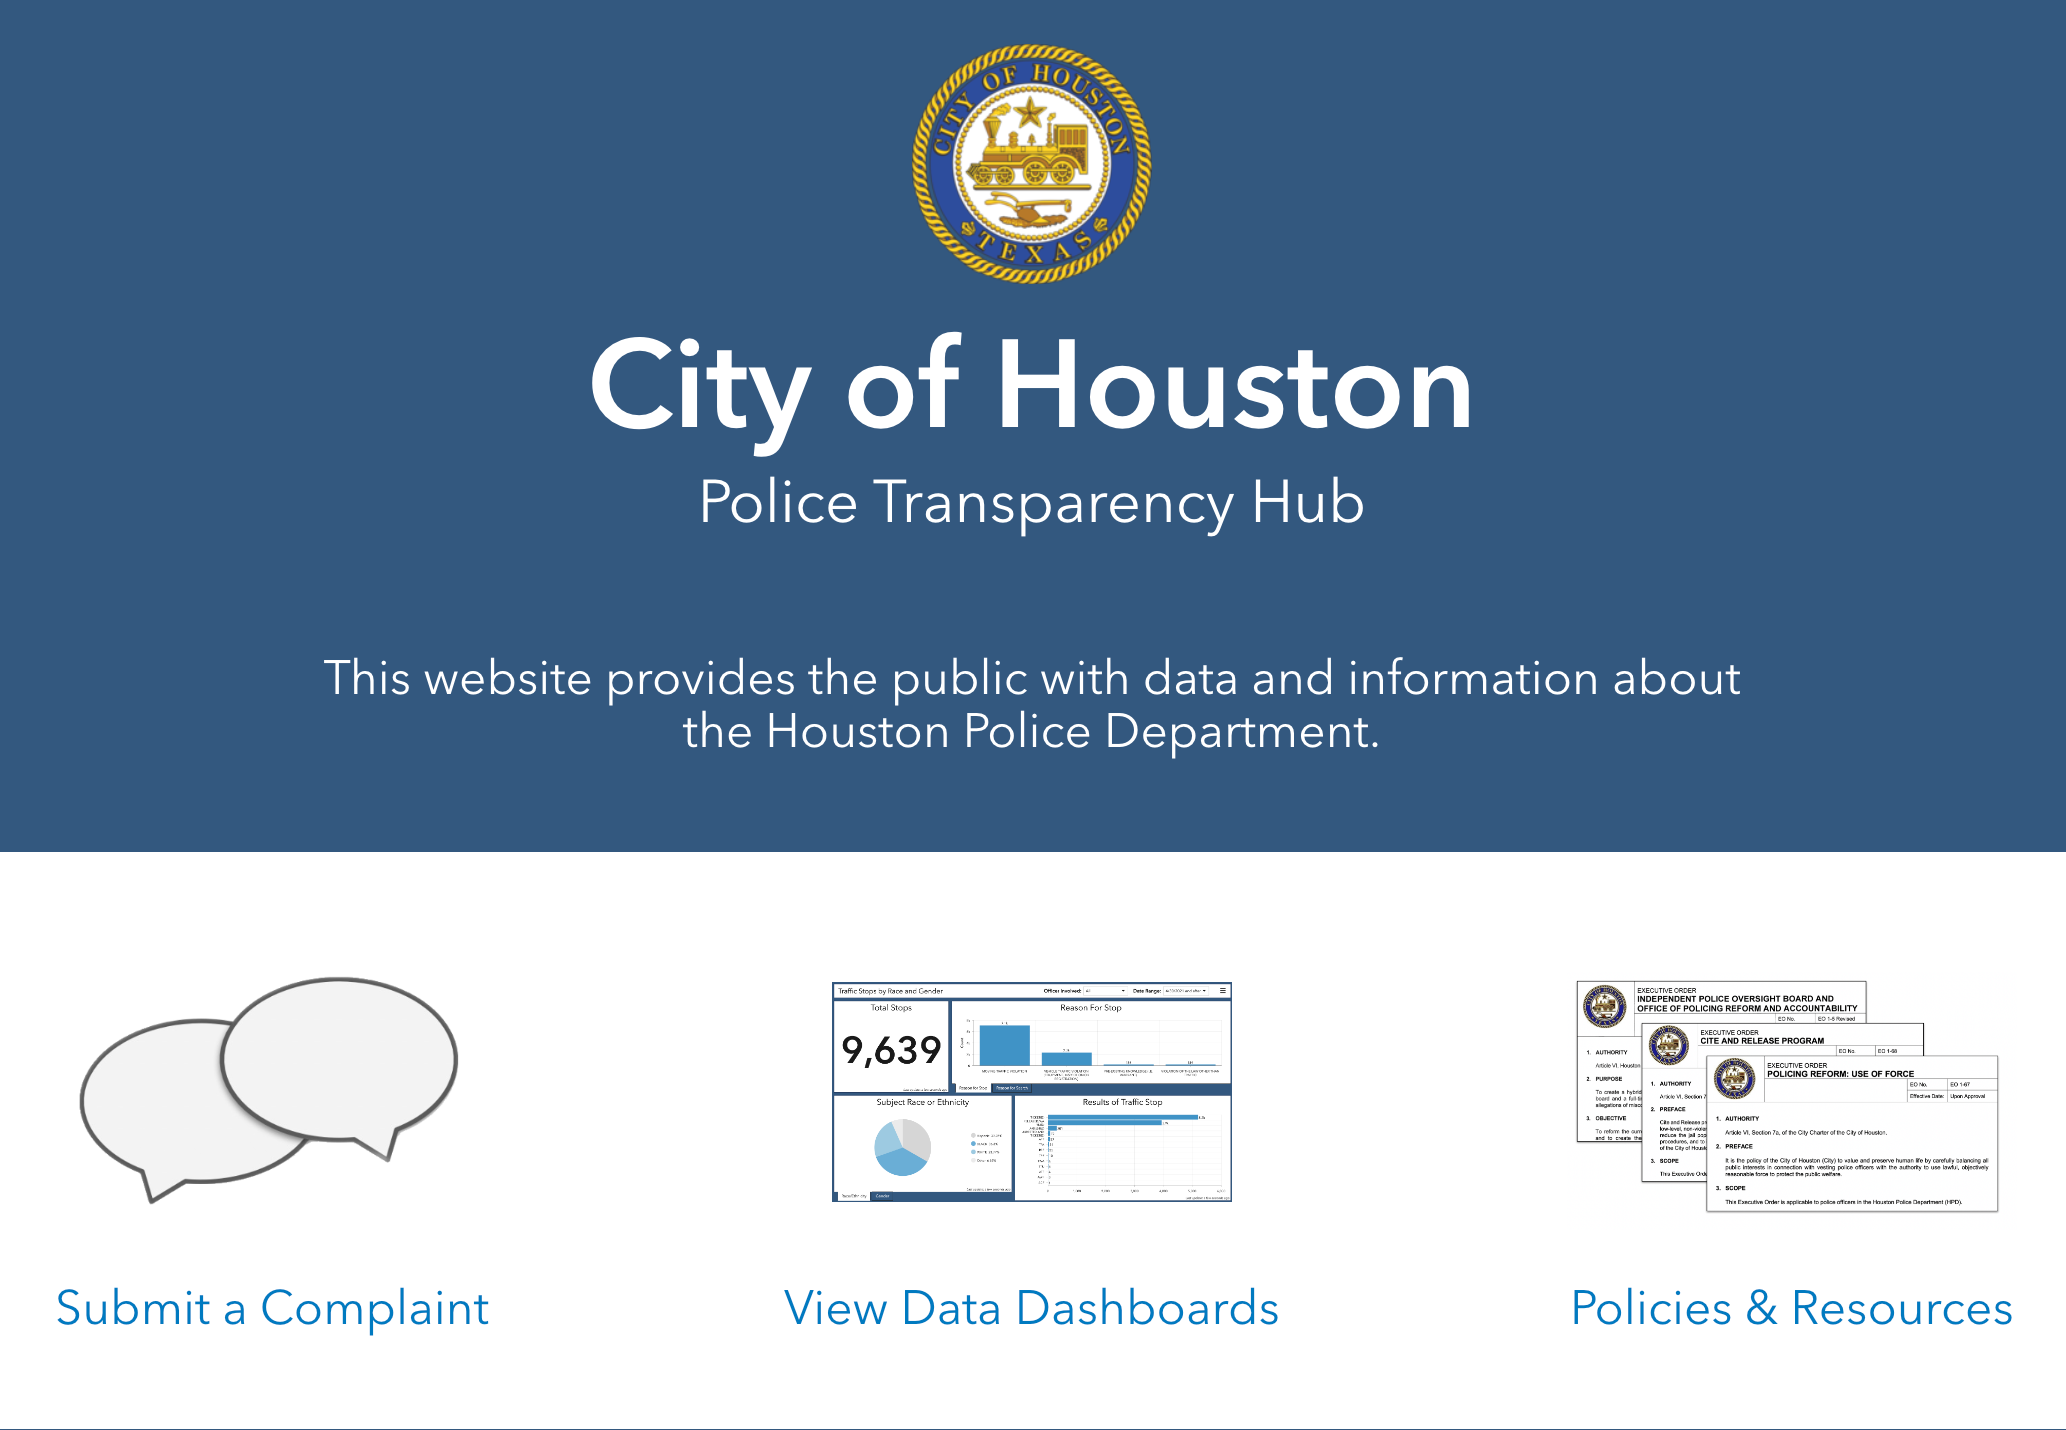 Police Transparency Hub